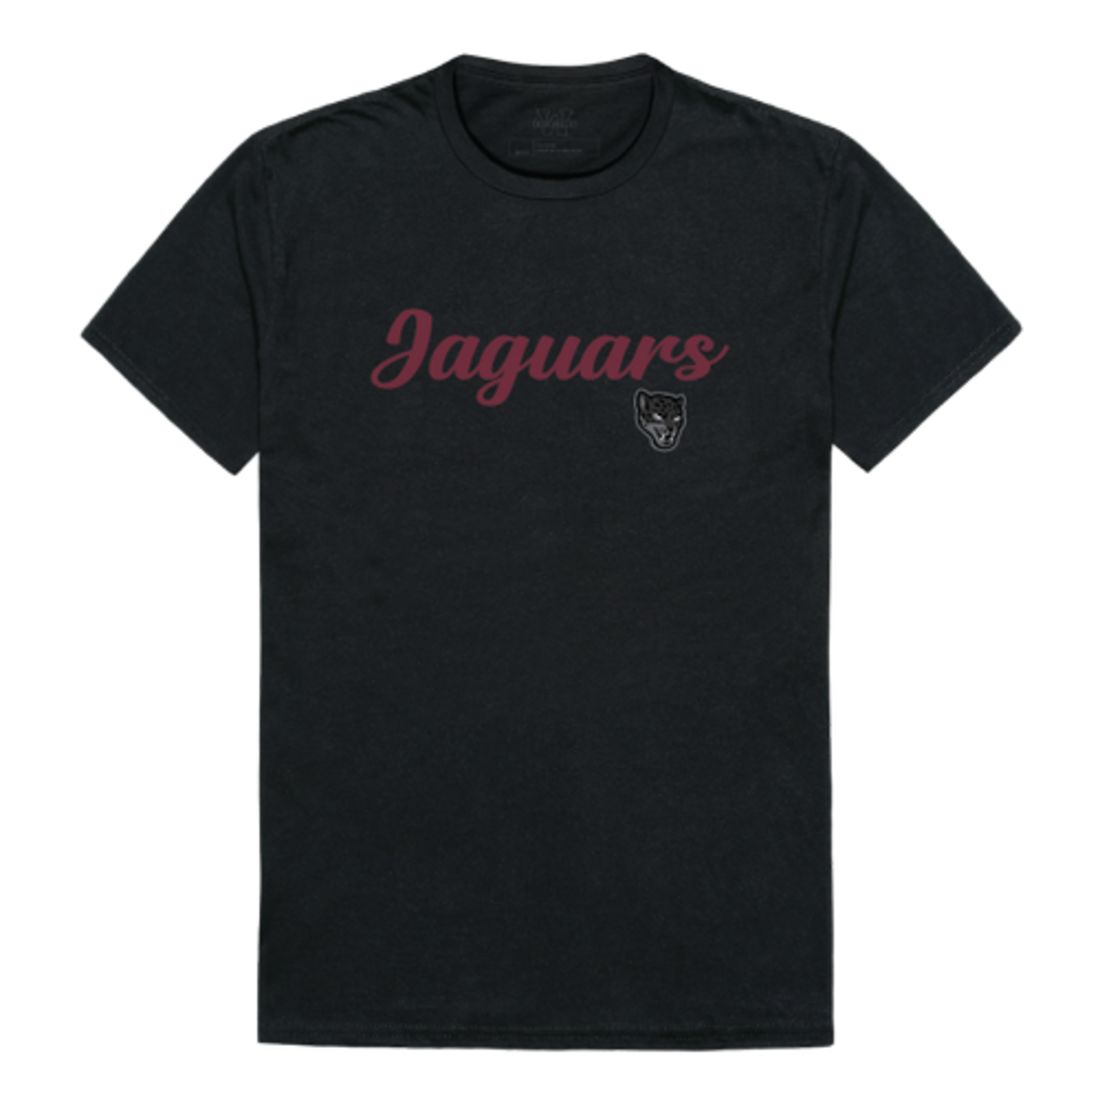 Texas A&M University-San Antonio Jaguars Script T-Shirt Tee